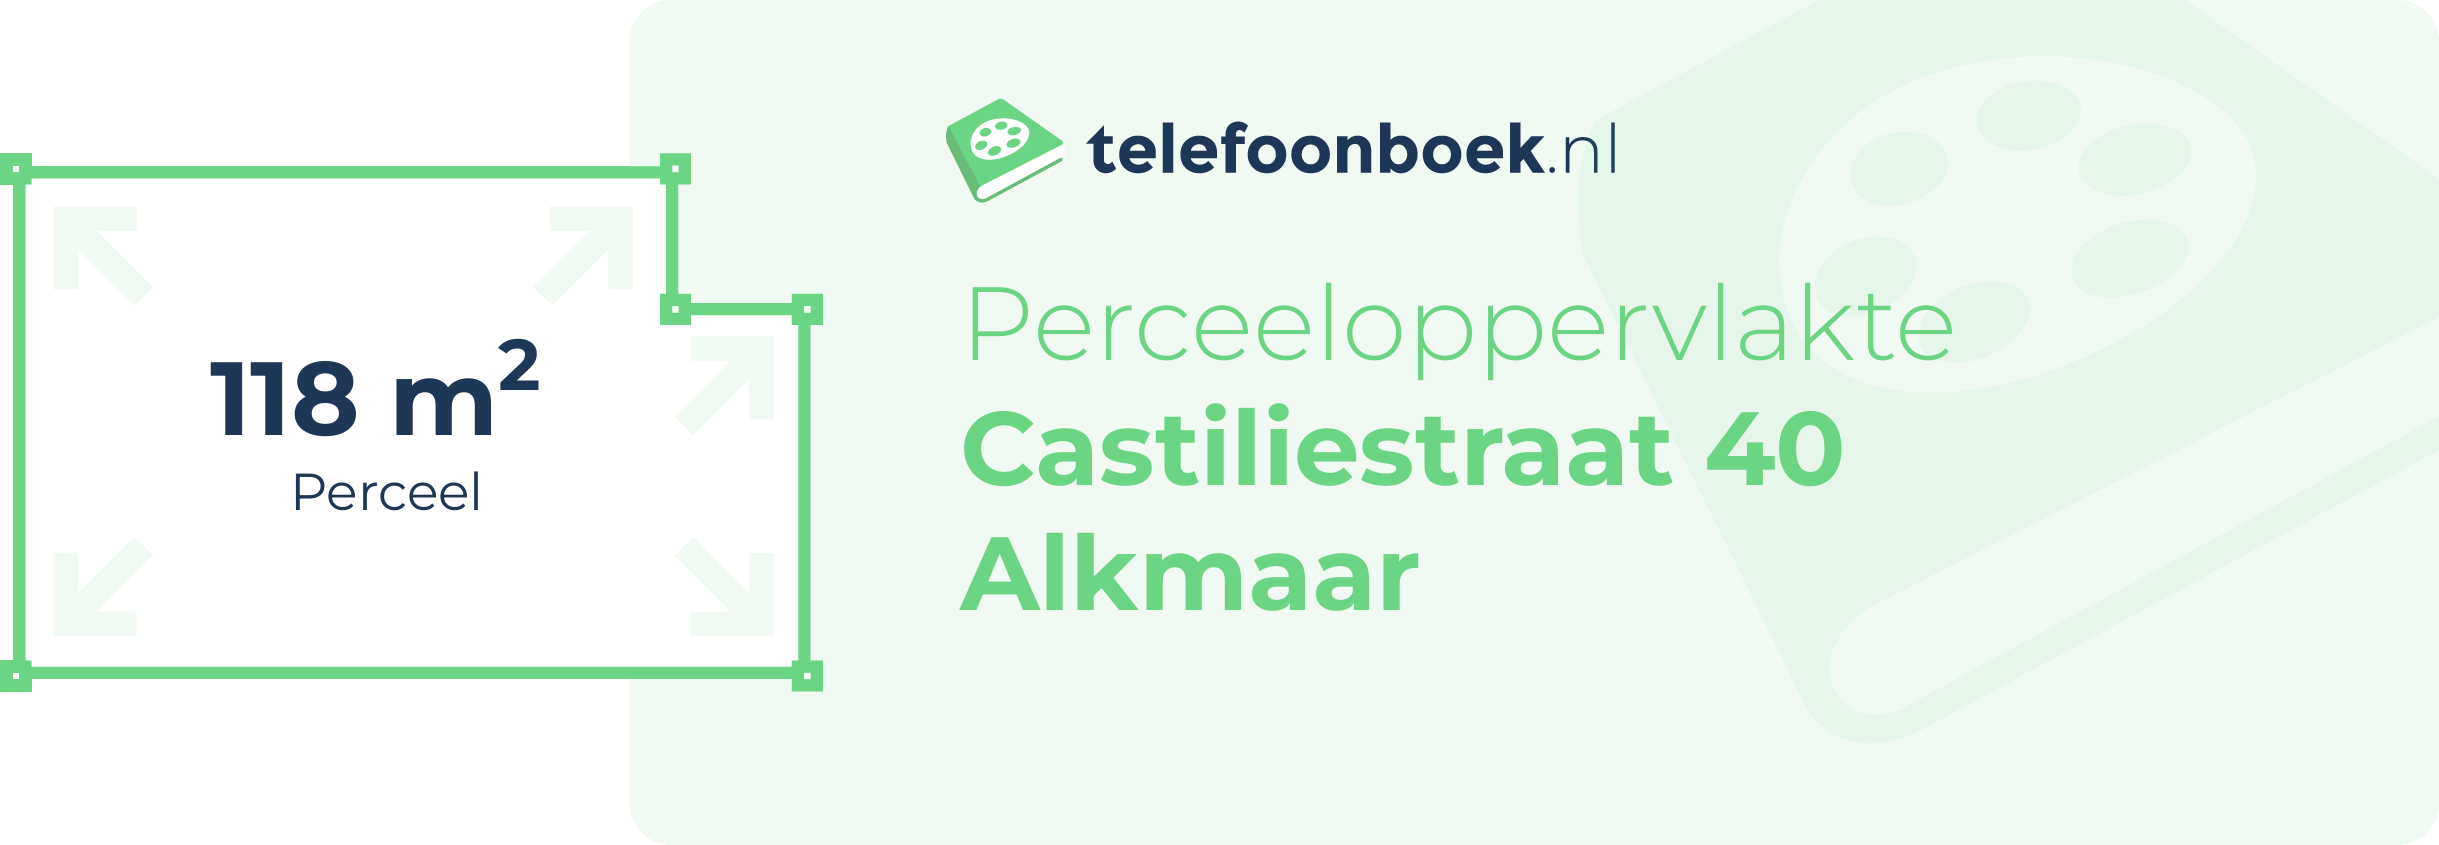 Perceeloppervlakte Castiliestraat 40 Alkmaar